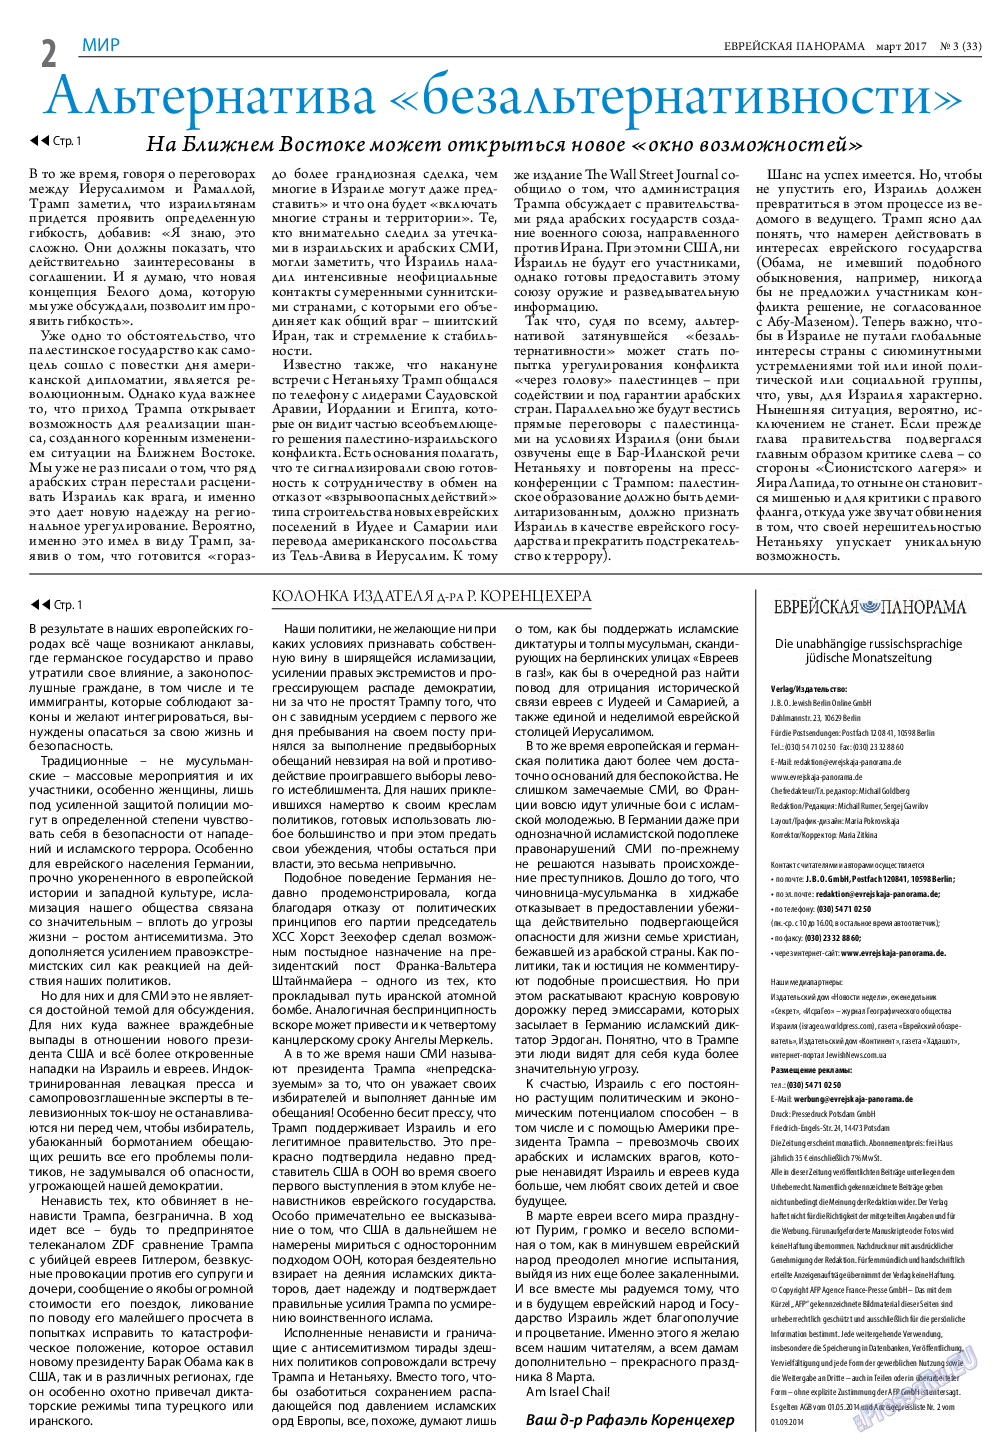 Еврейская панорама, газета. 2017 №3 стр.2